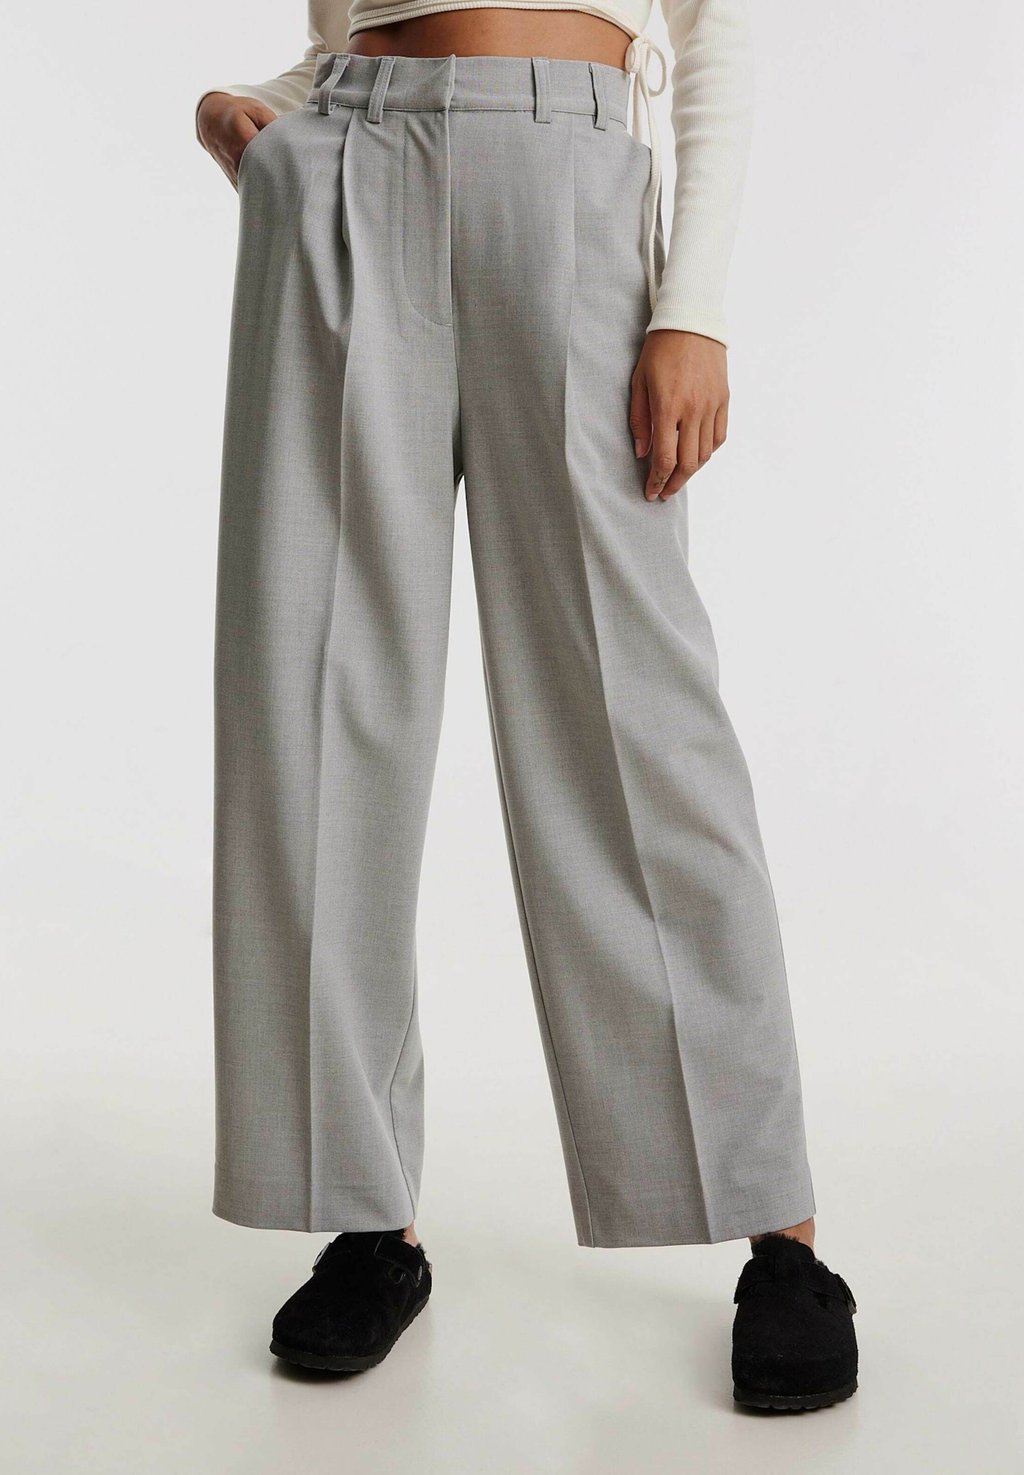 Брюки из ткани KAJ EDITED, цвет grau брюки из ткани liliput цвет grau melange